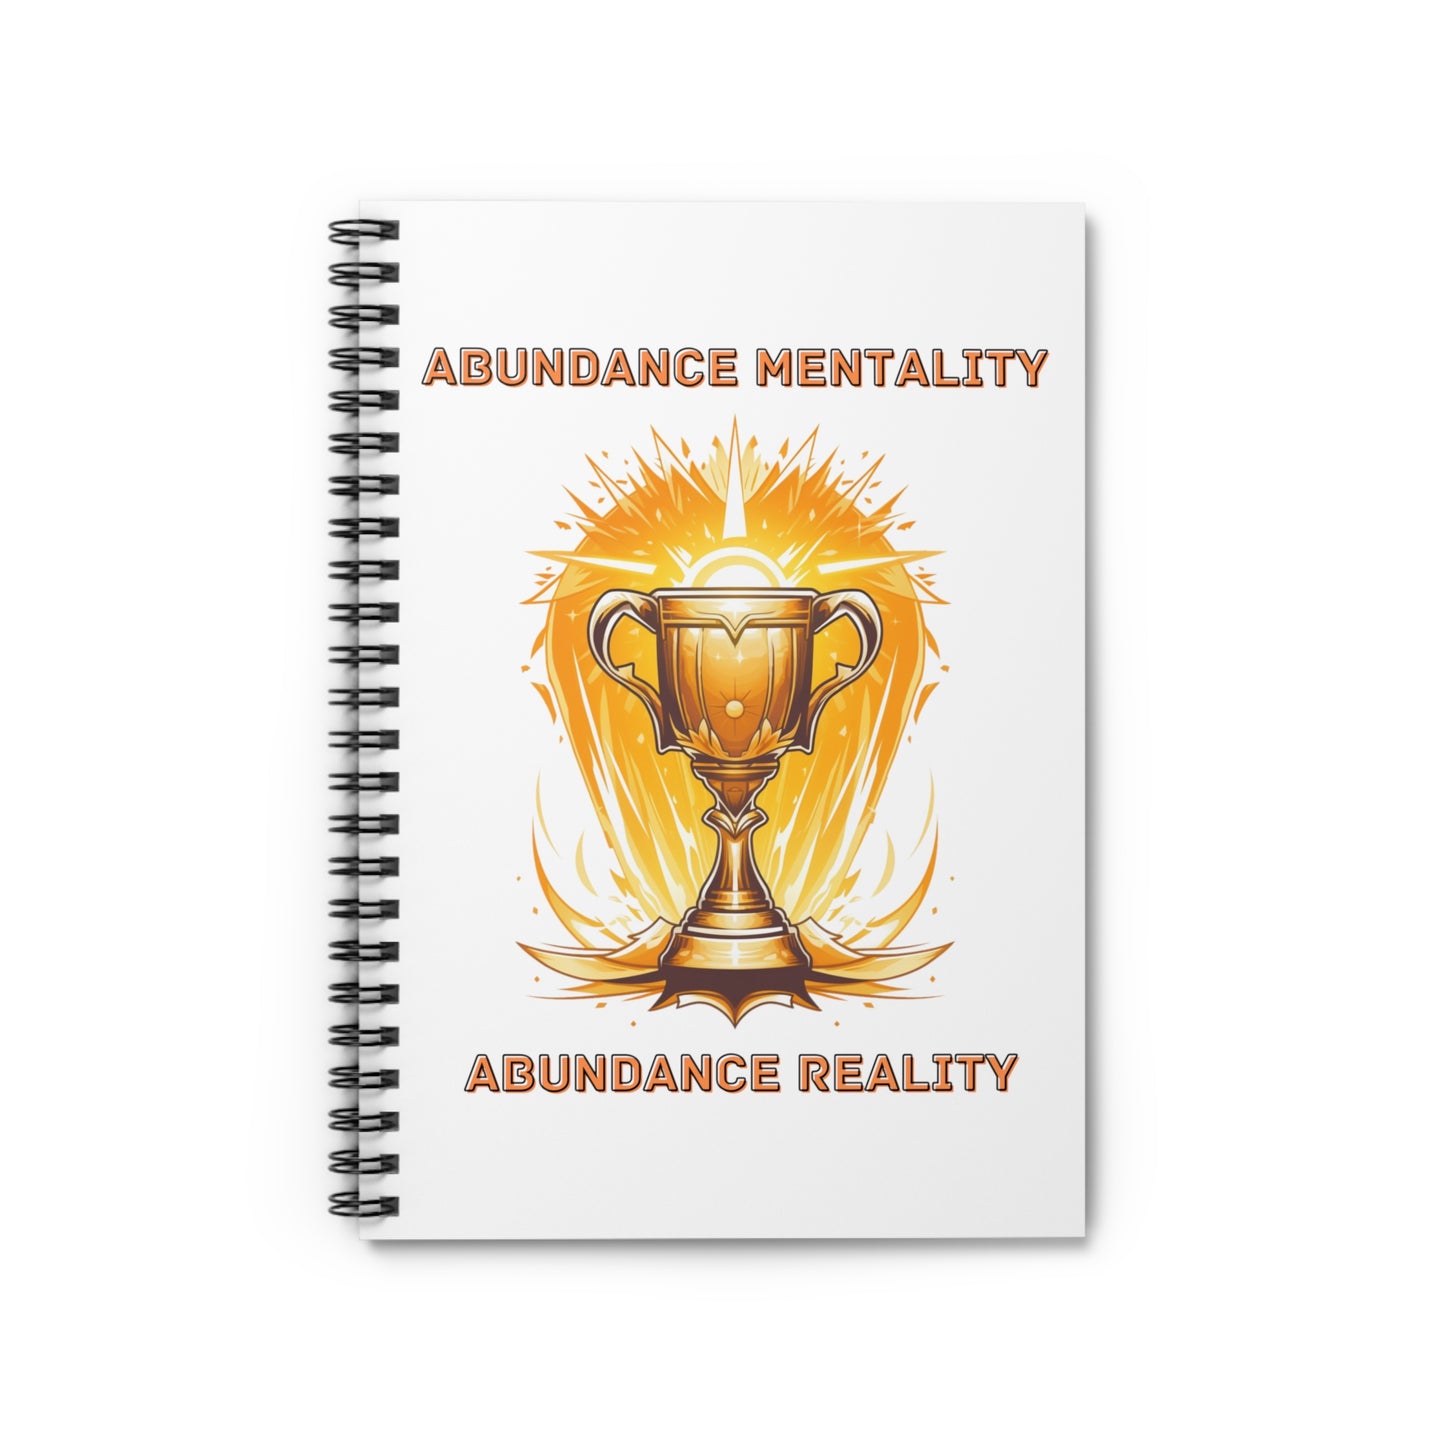 Abundance Reality | Spiral Notebook - Ruled Line